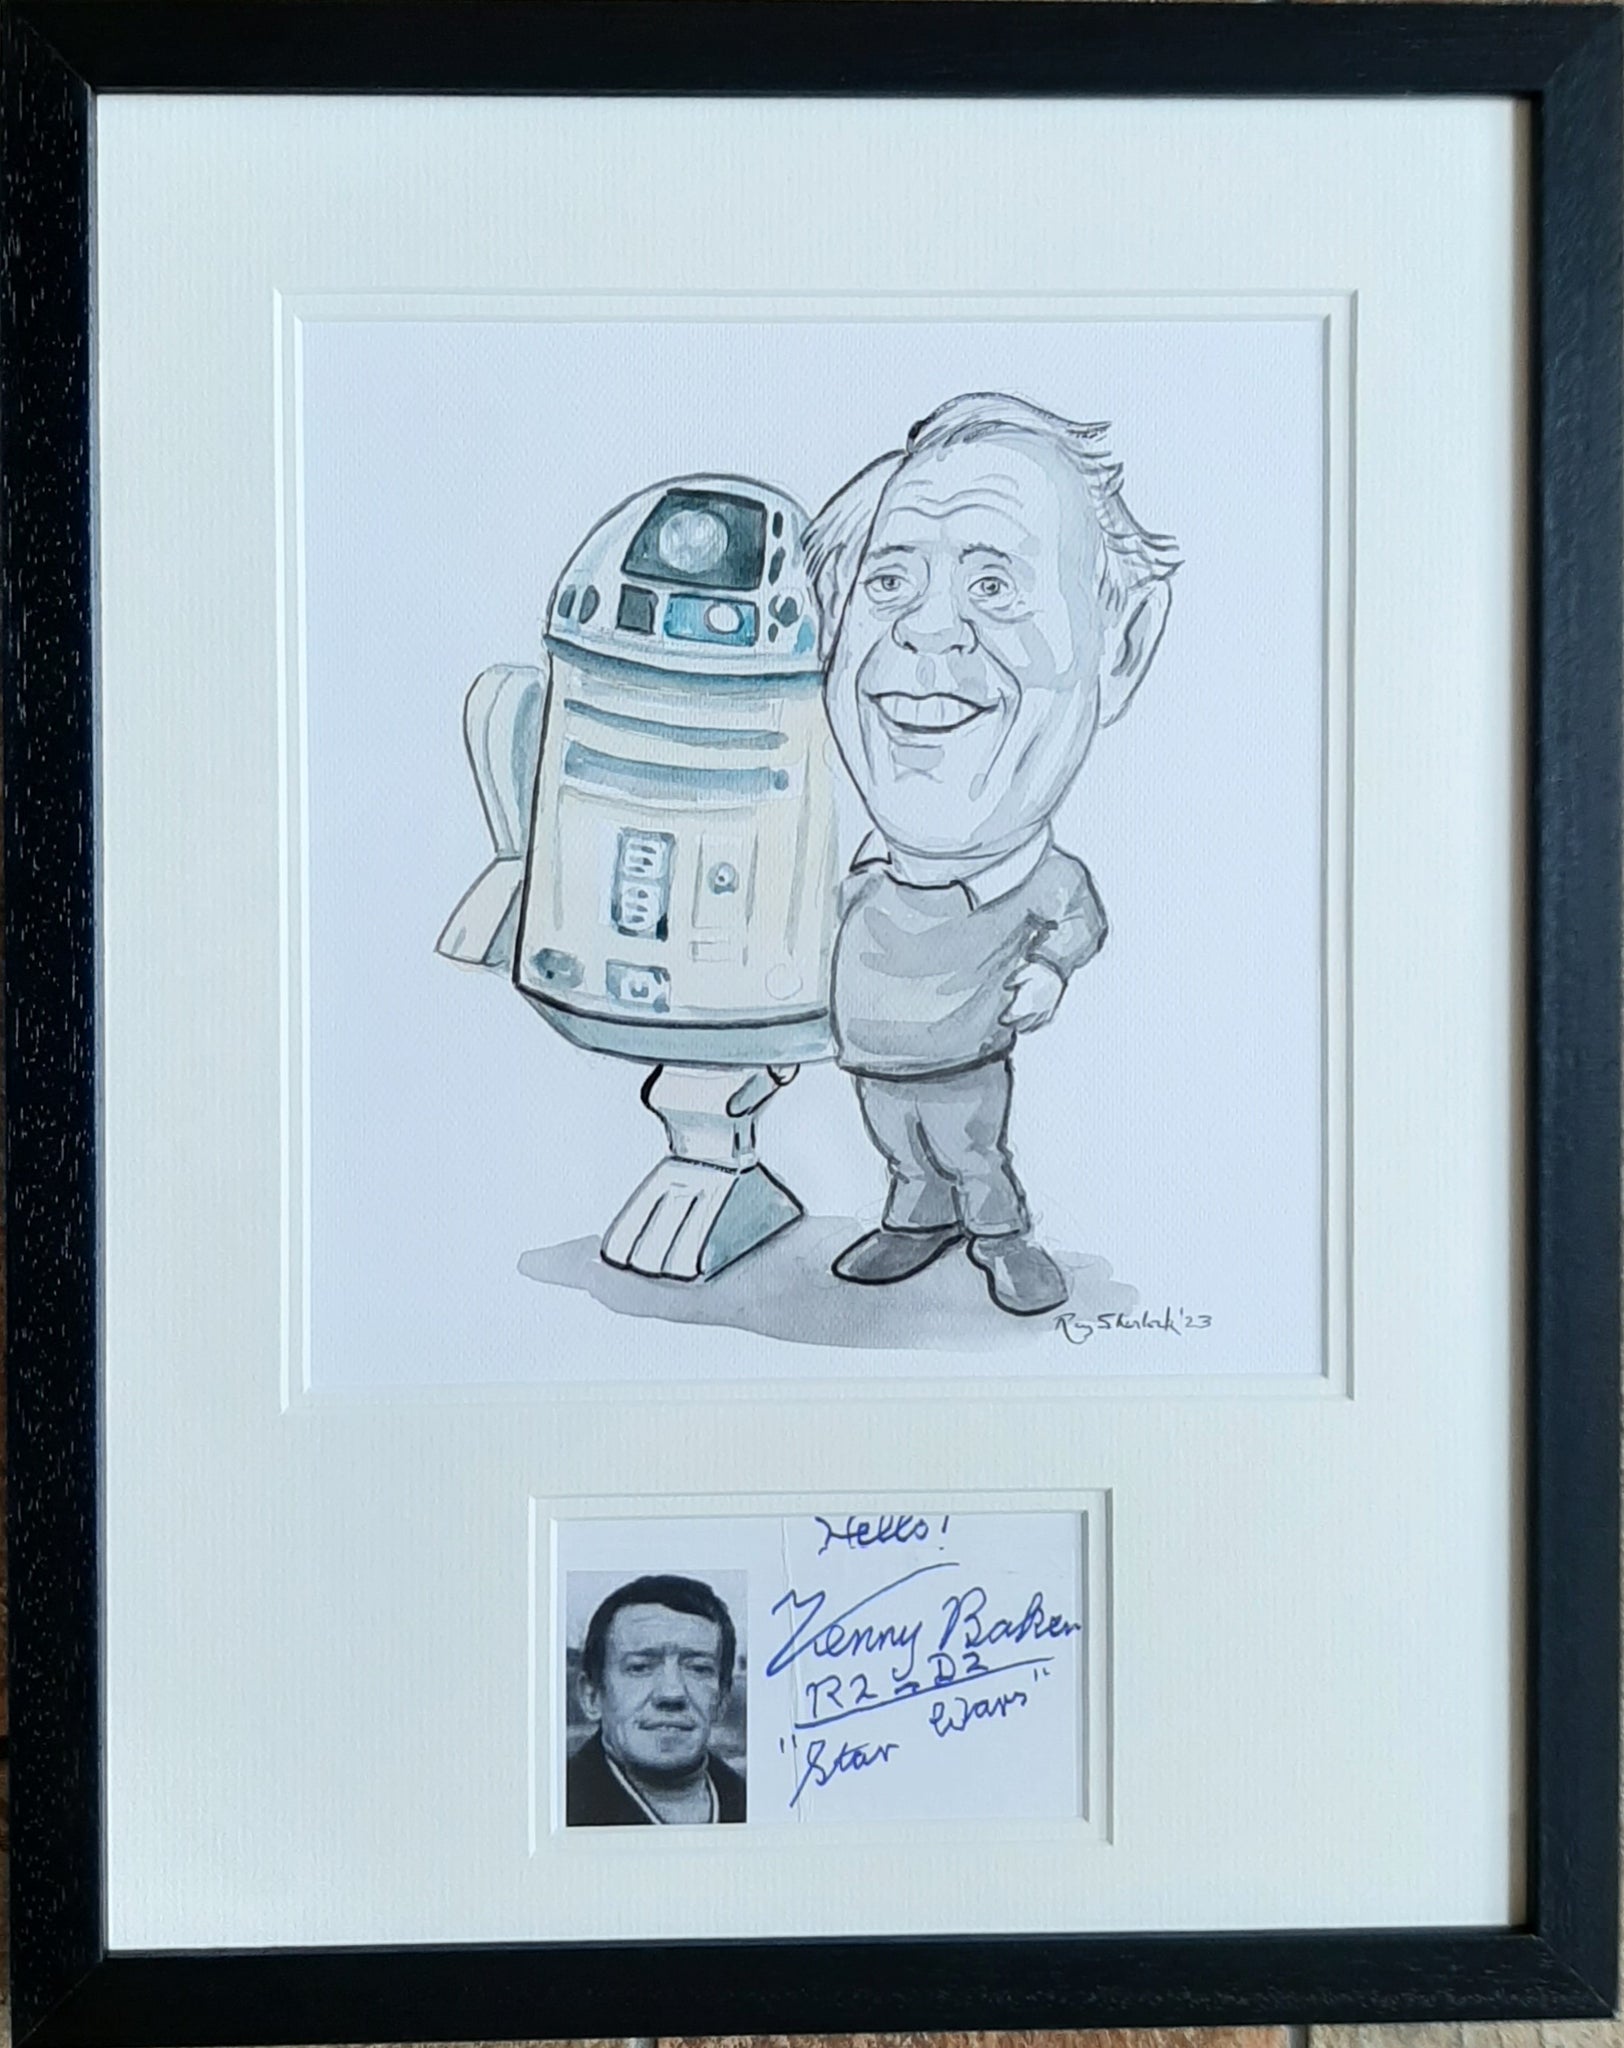 Ray Sherlock "Kenny Baker AKA R2-D2 (Star Wars)" (Autographed)